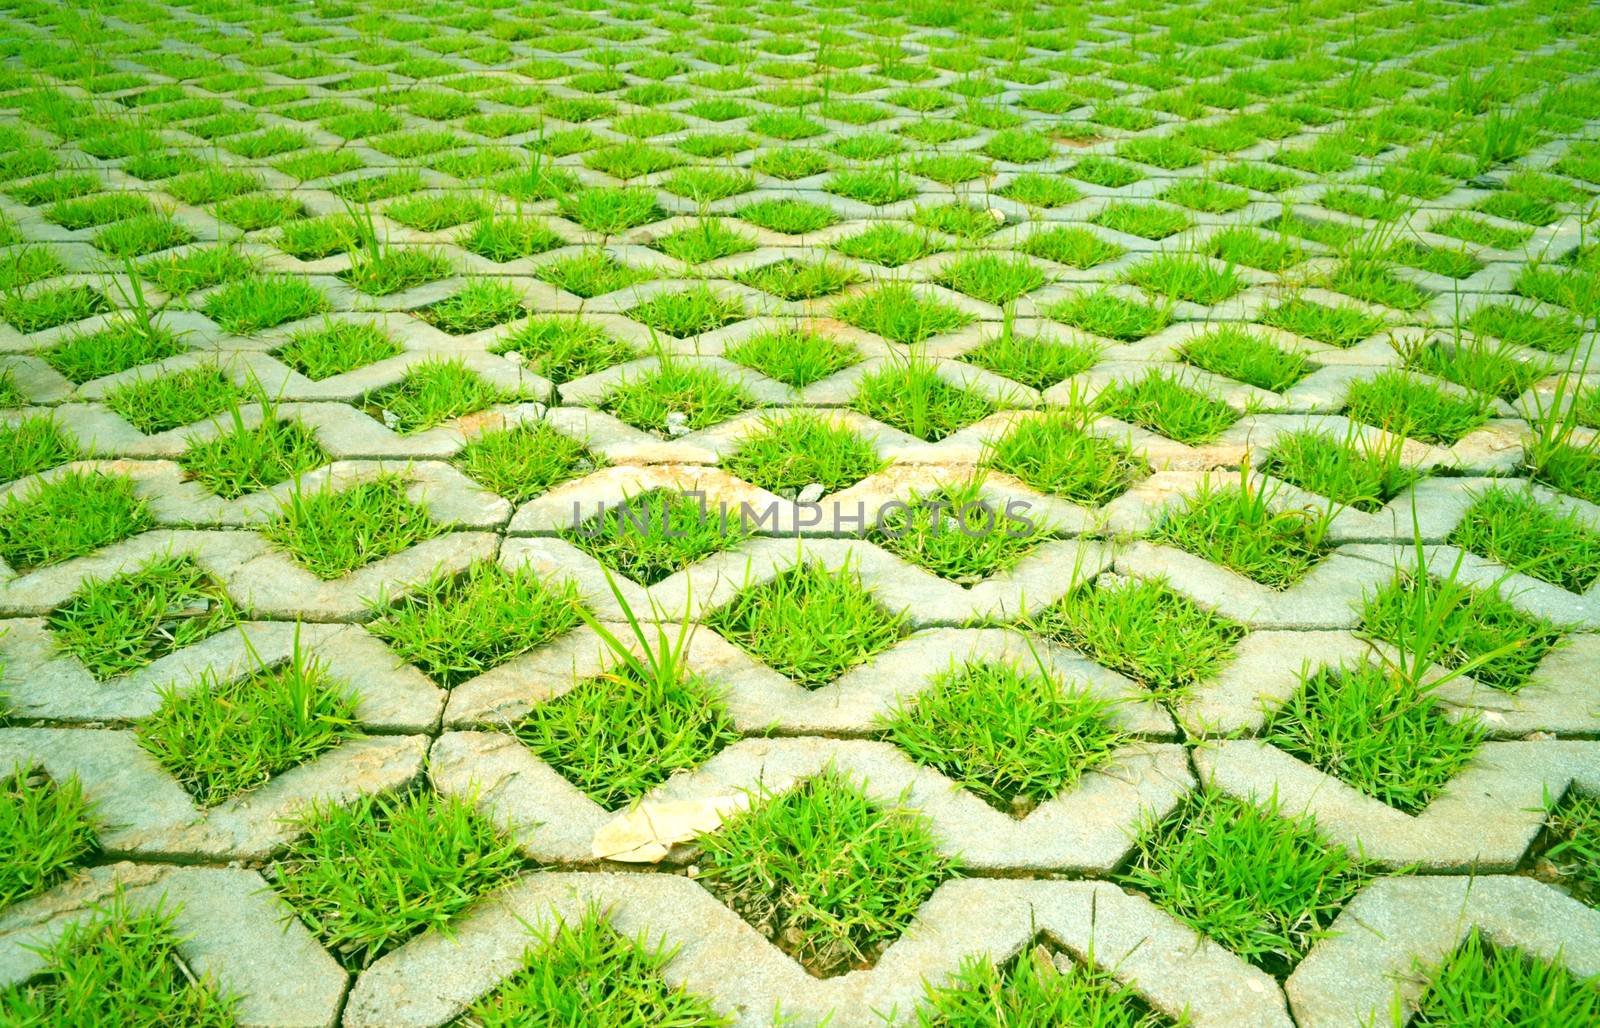 Grass in concrete by apichart